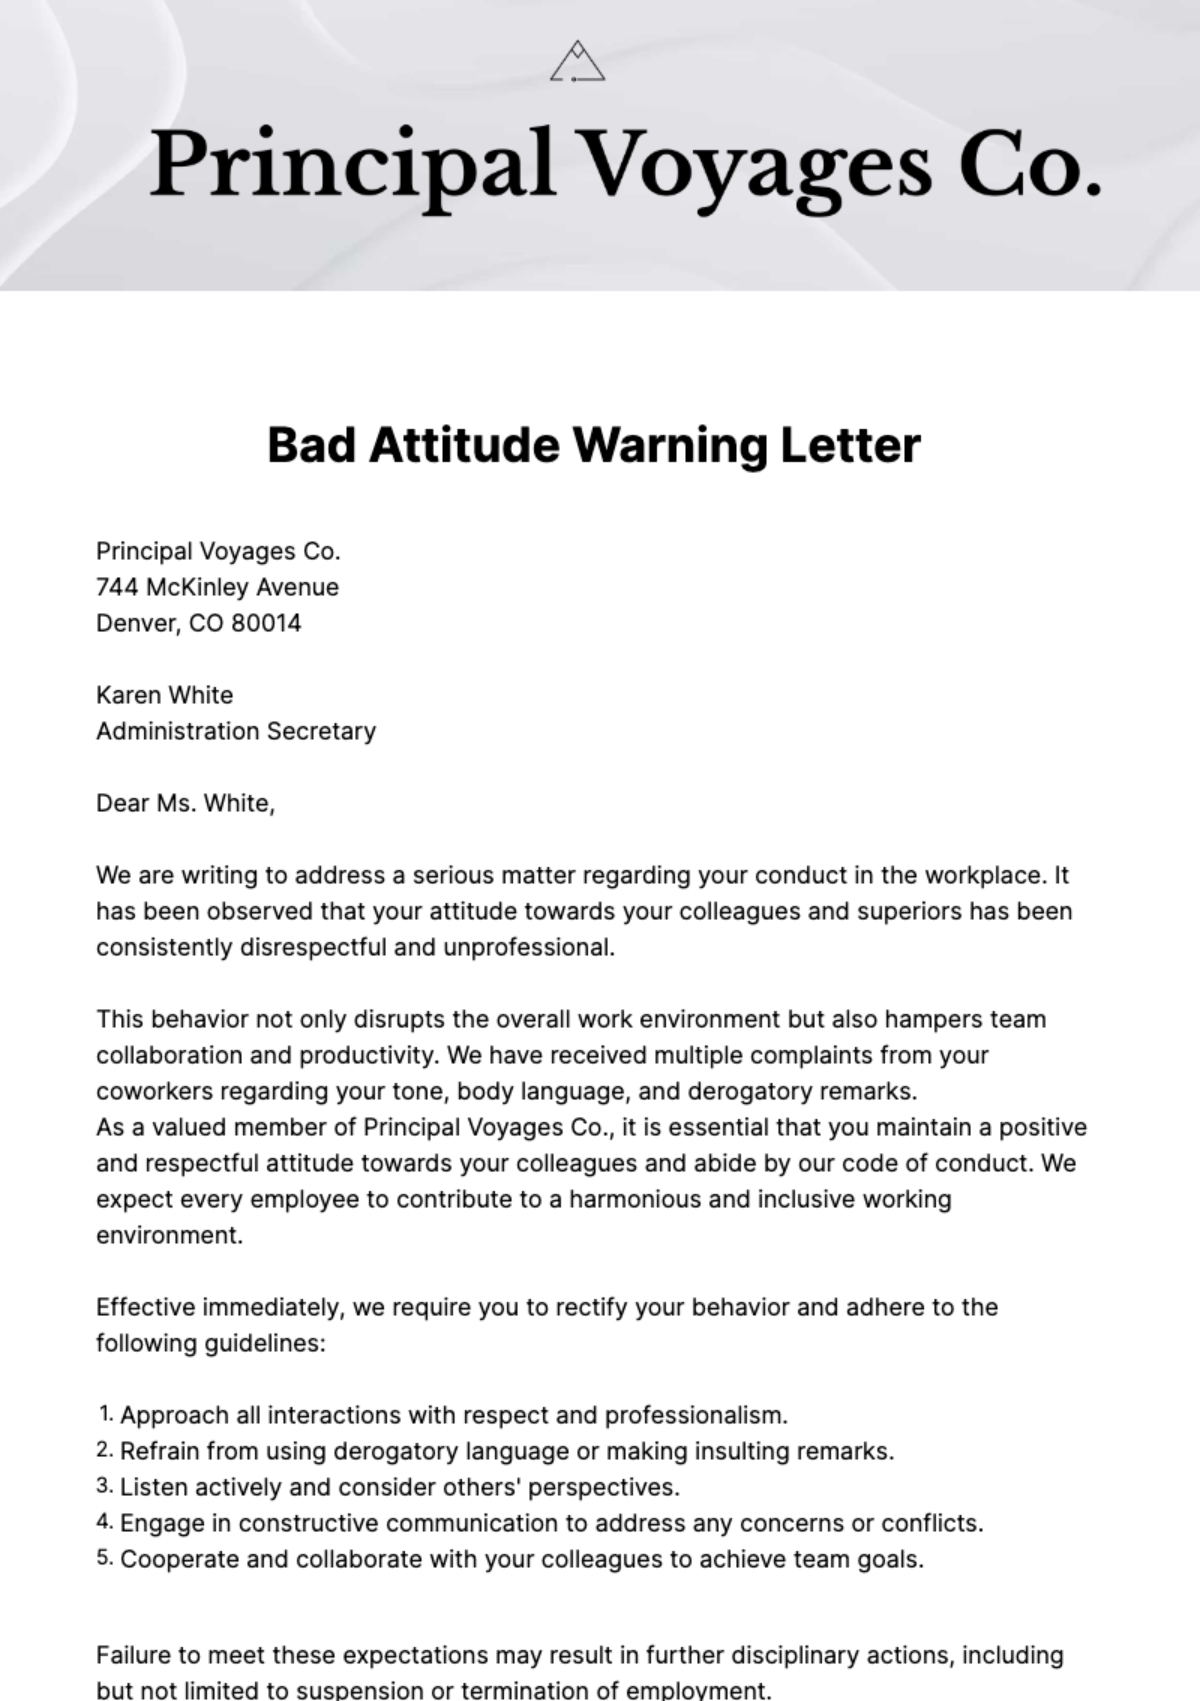 Bad Attitude Warning Letter Template